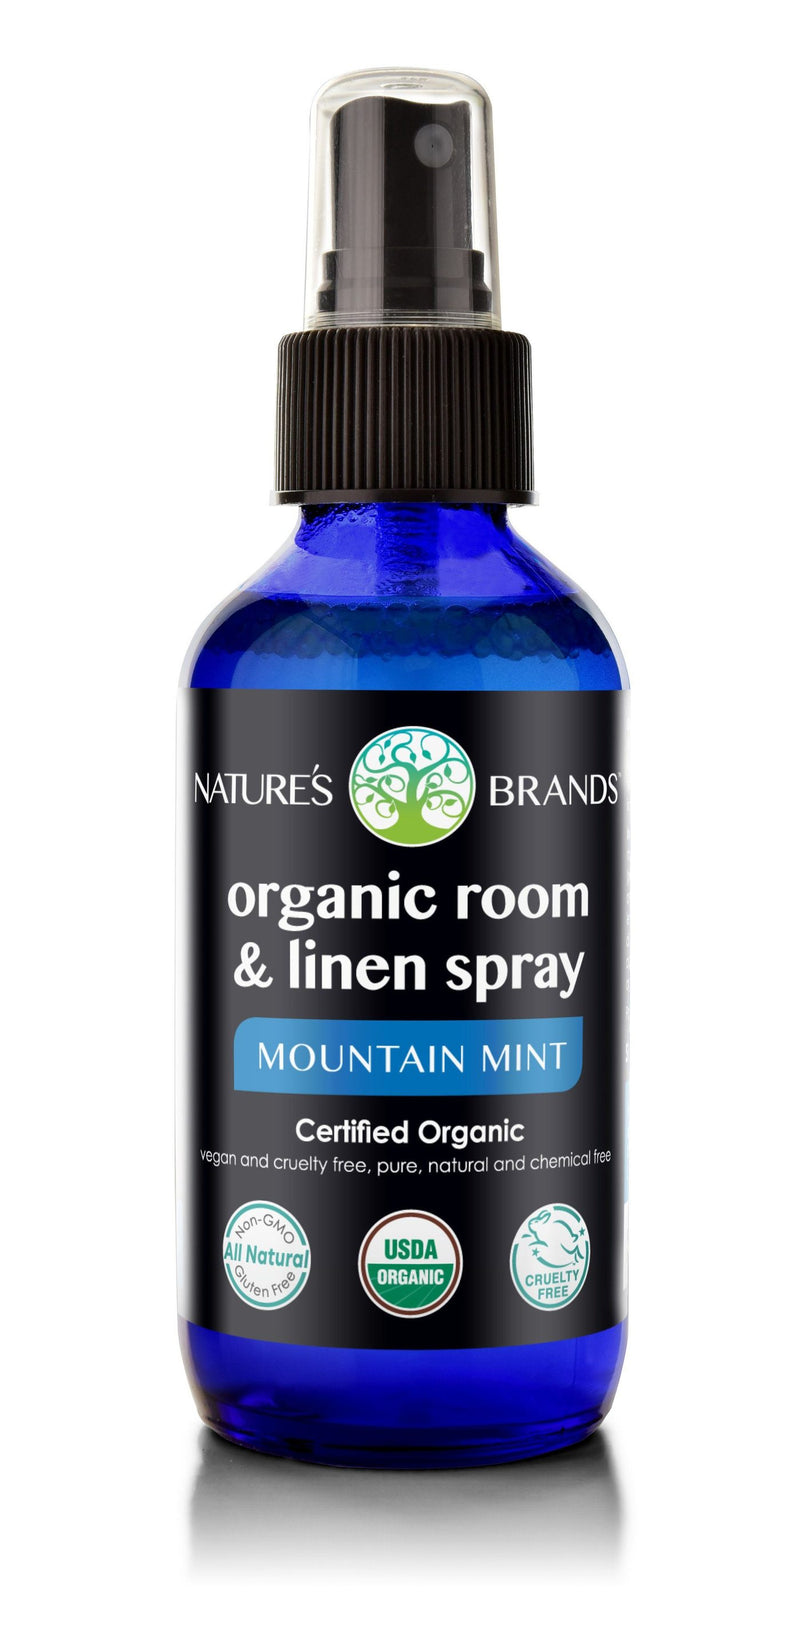 Herbal Choice Mari Organic Linen Spray - Herbal Choice Mari Organic Linen Spray - Herbal Choice Mari Organic Linen Spray